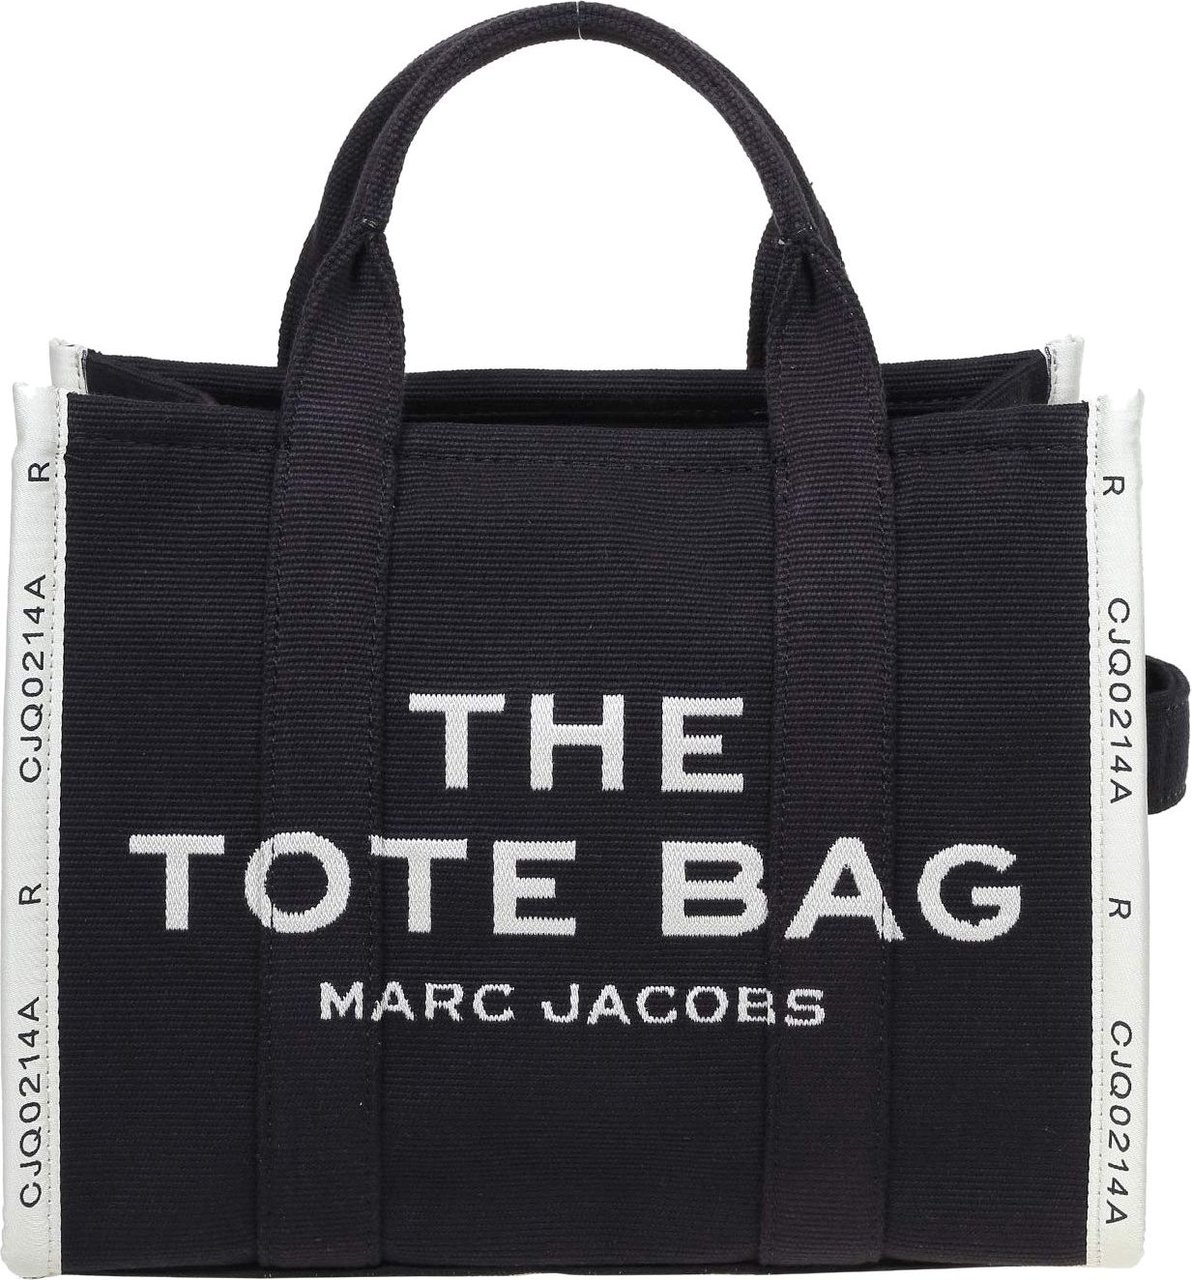 Marc Jacobs Marc jacobs the medium tote in black jacquard Zwart